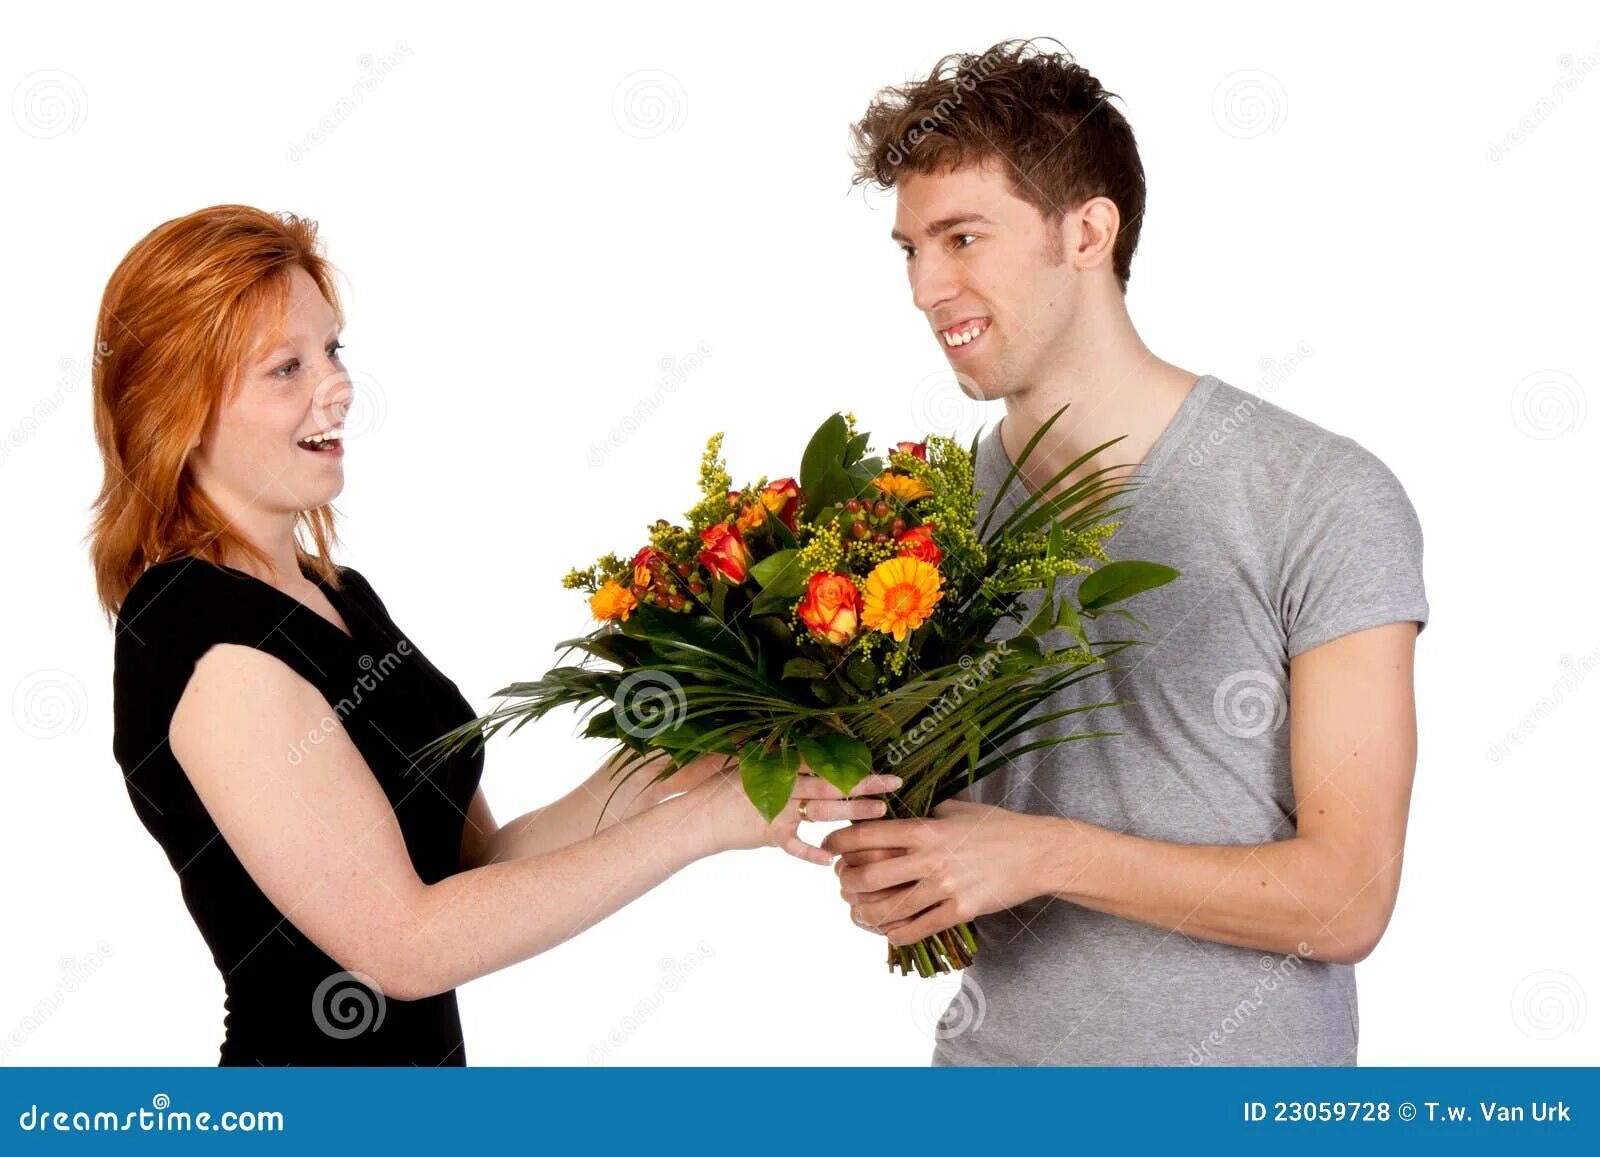 Сонник муж подарил. Мужчина дарит цветы женщине. Мужчина дарит букет цветов. Парень дарит девушке цветы. Парень дарит цветы маме.